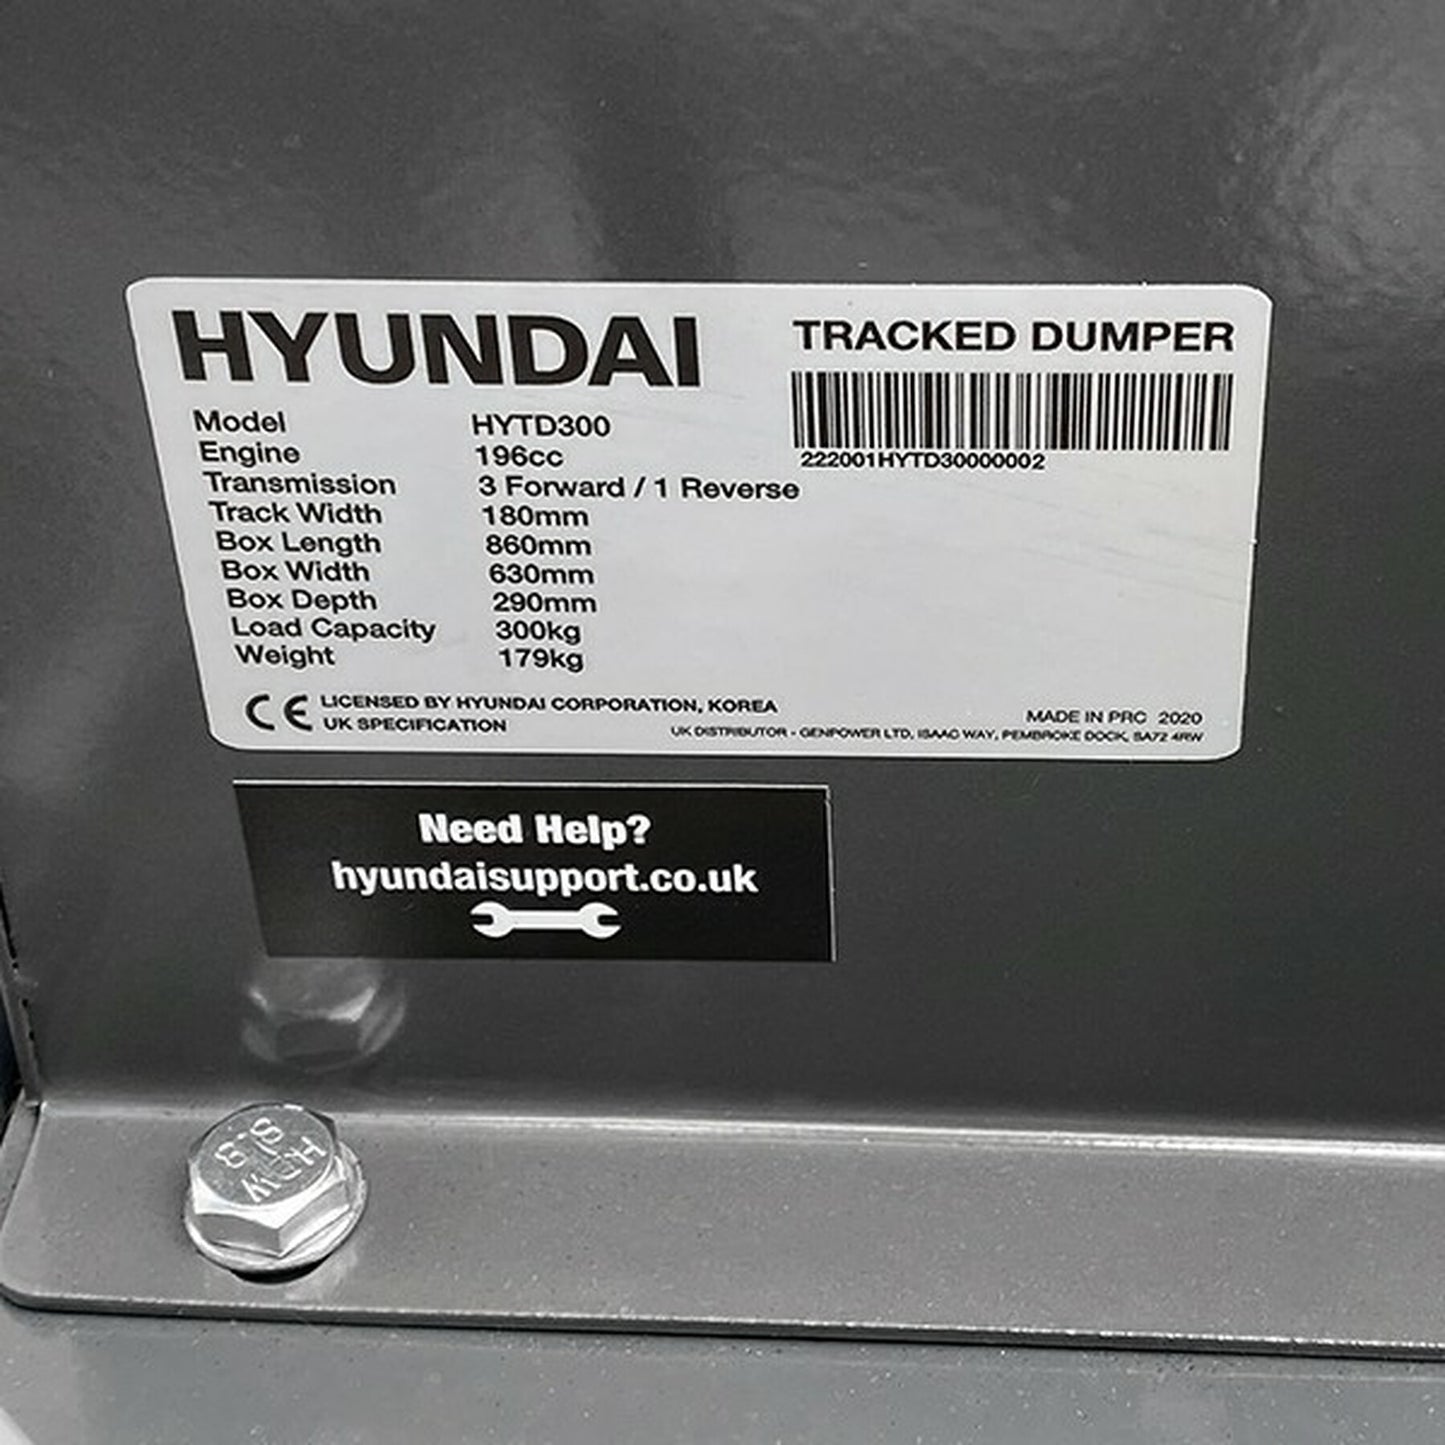 Hyundai HYTD300 Tracked Mini Dumper, Power Barrow & Transporter